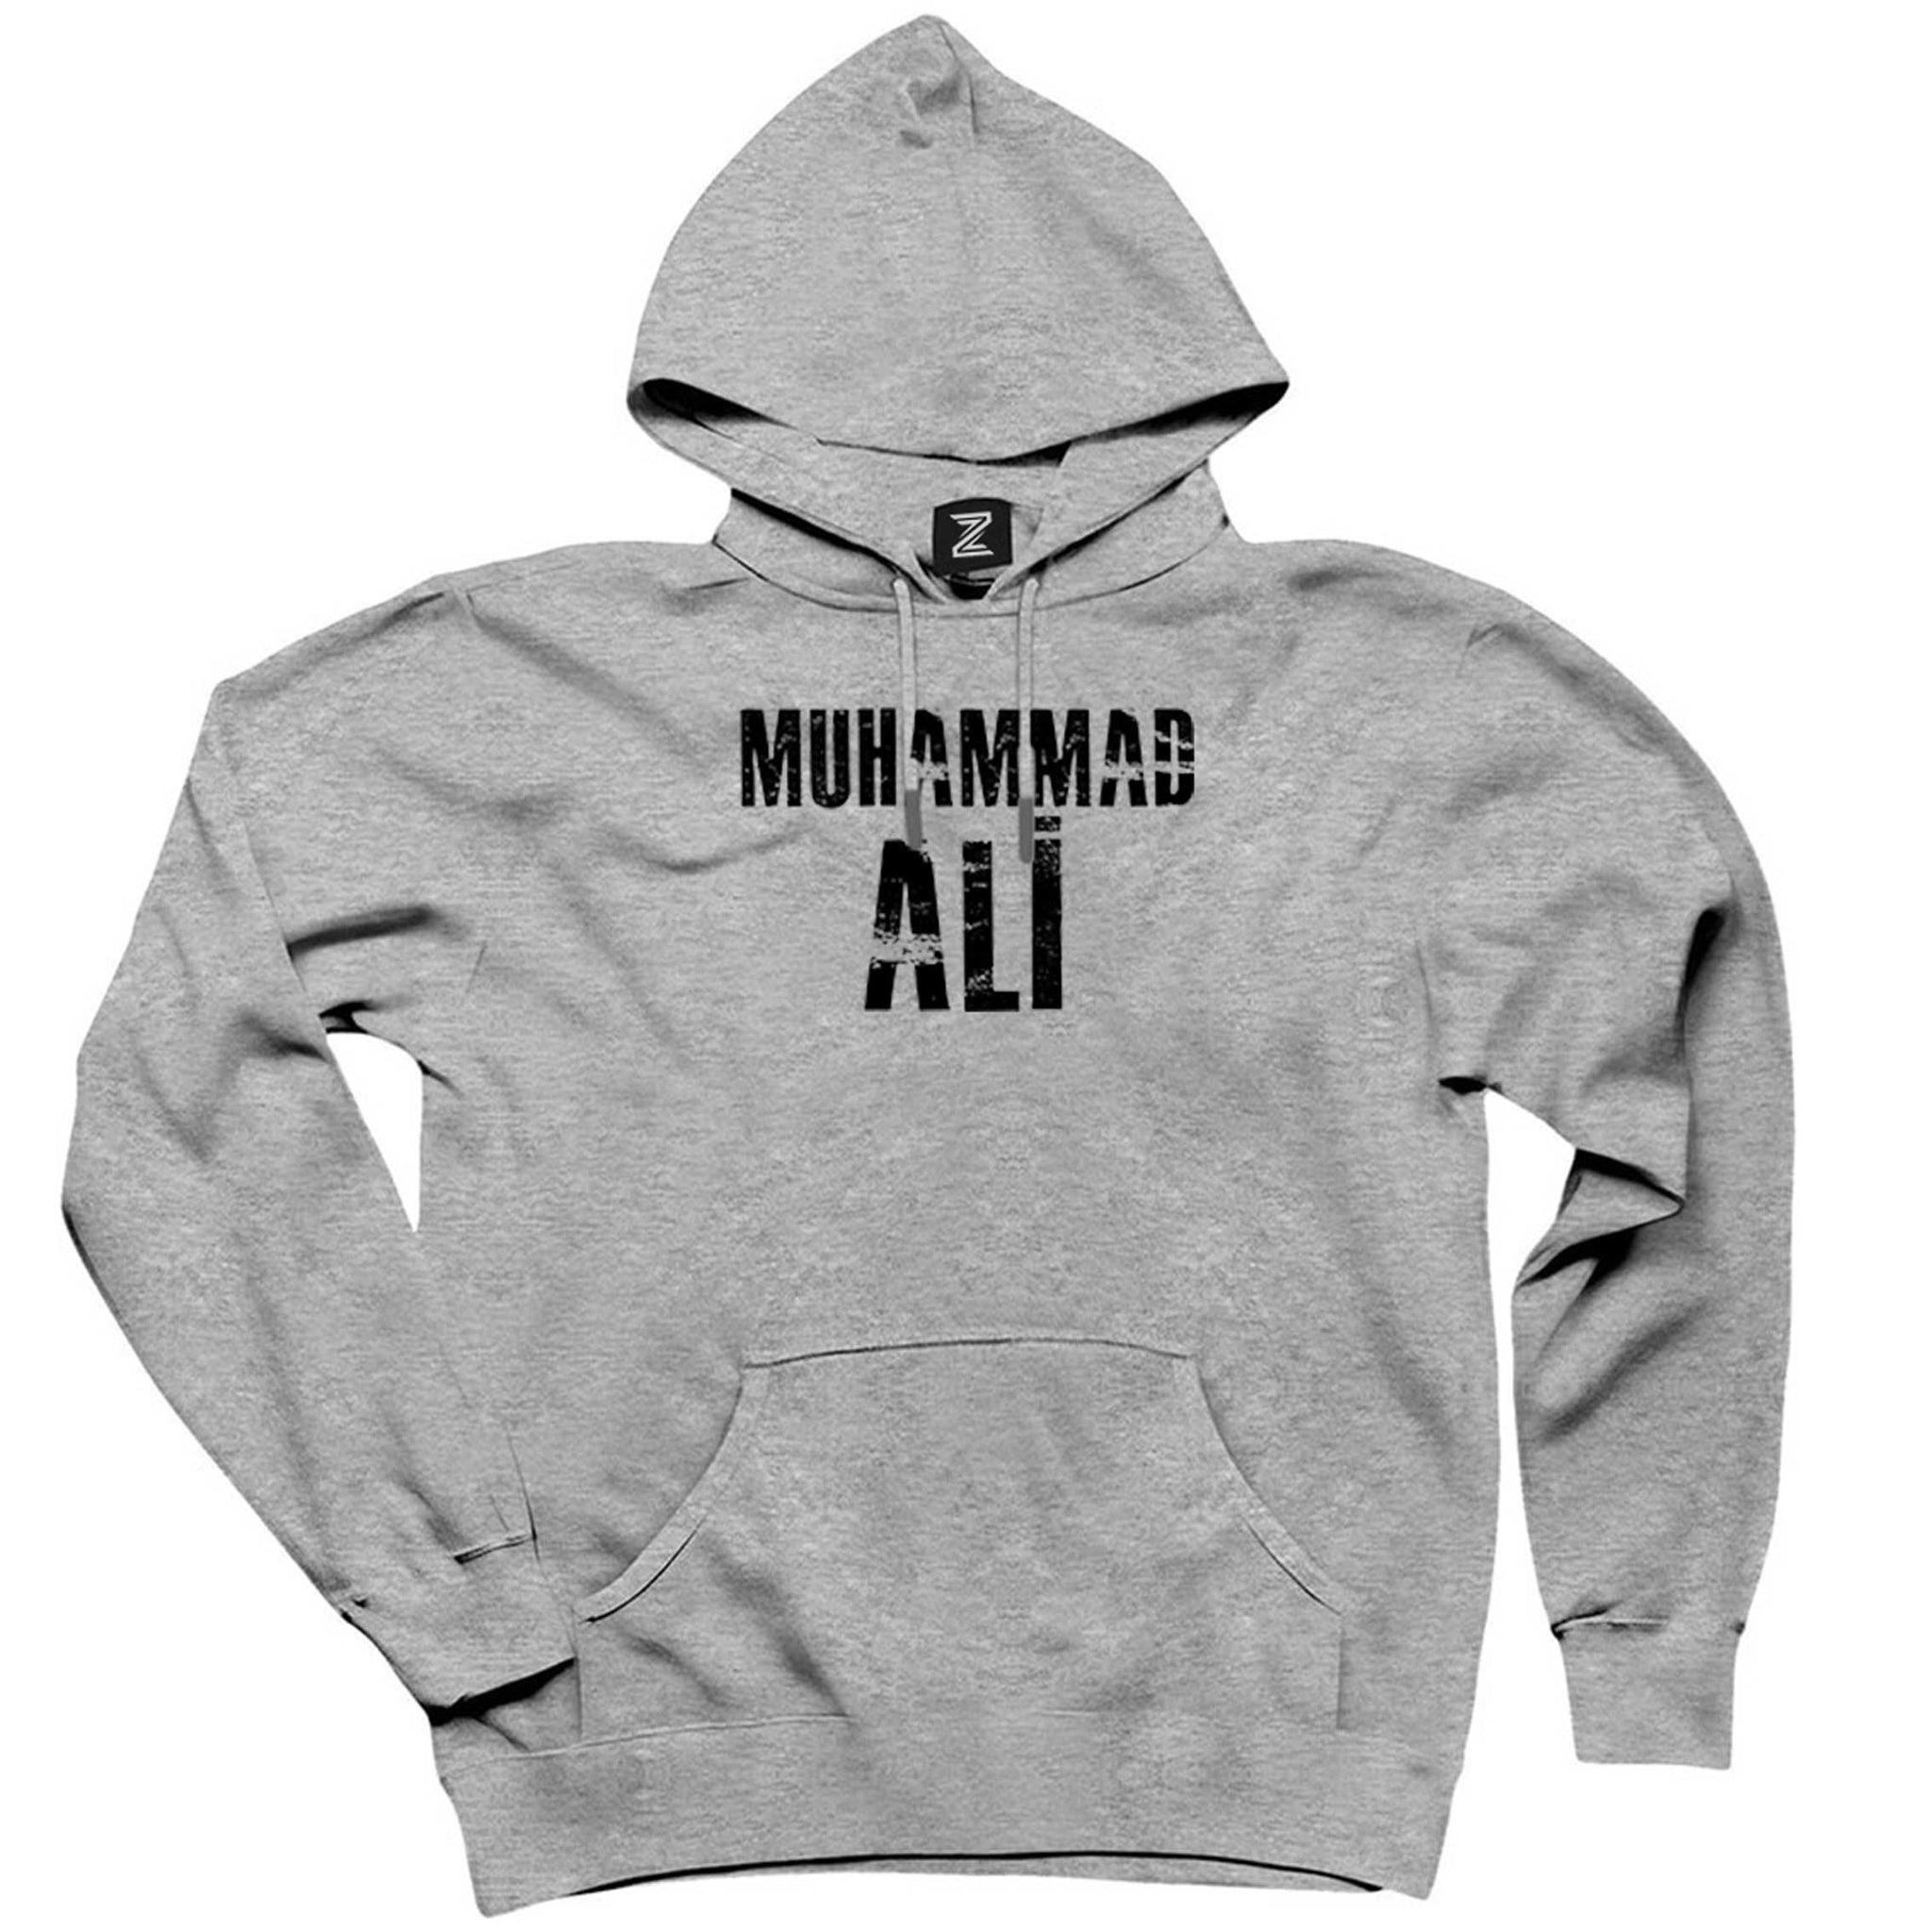 Muhammed Ali Black Text Gri Kapşonlu Sweatshirt Hoodie